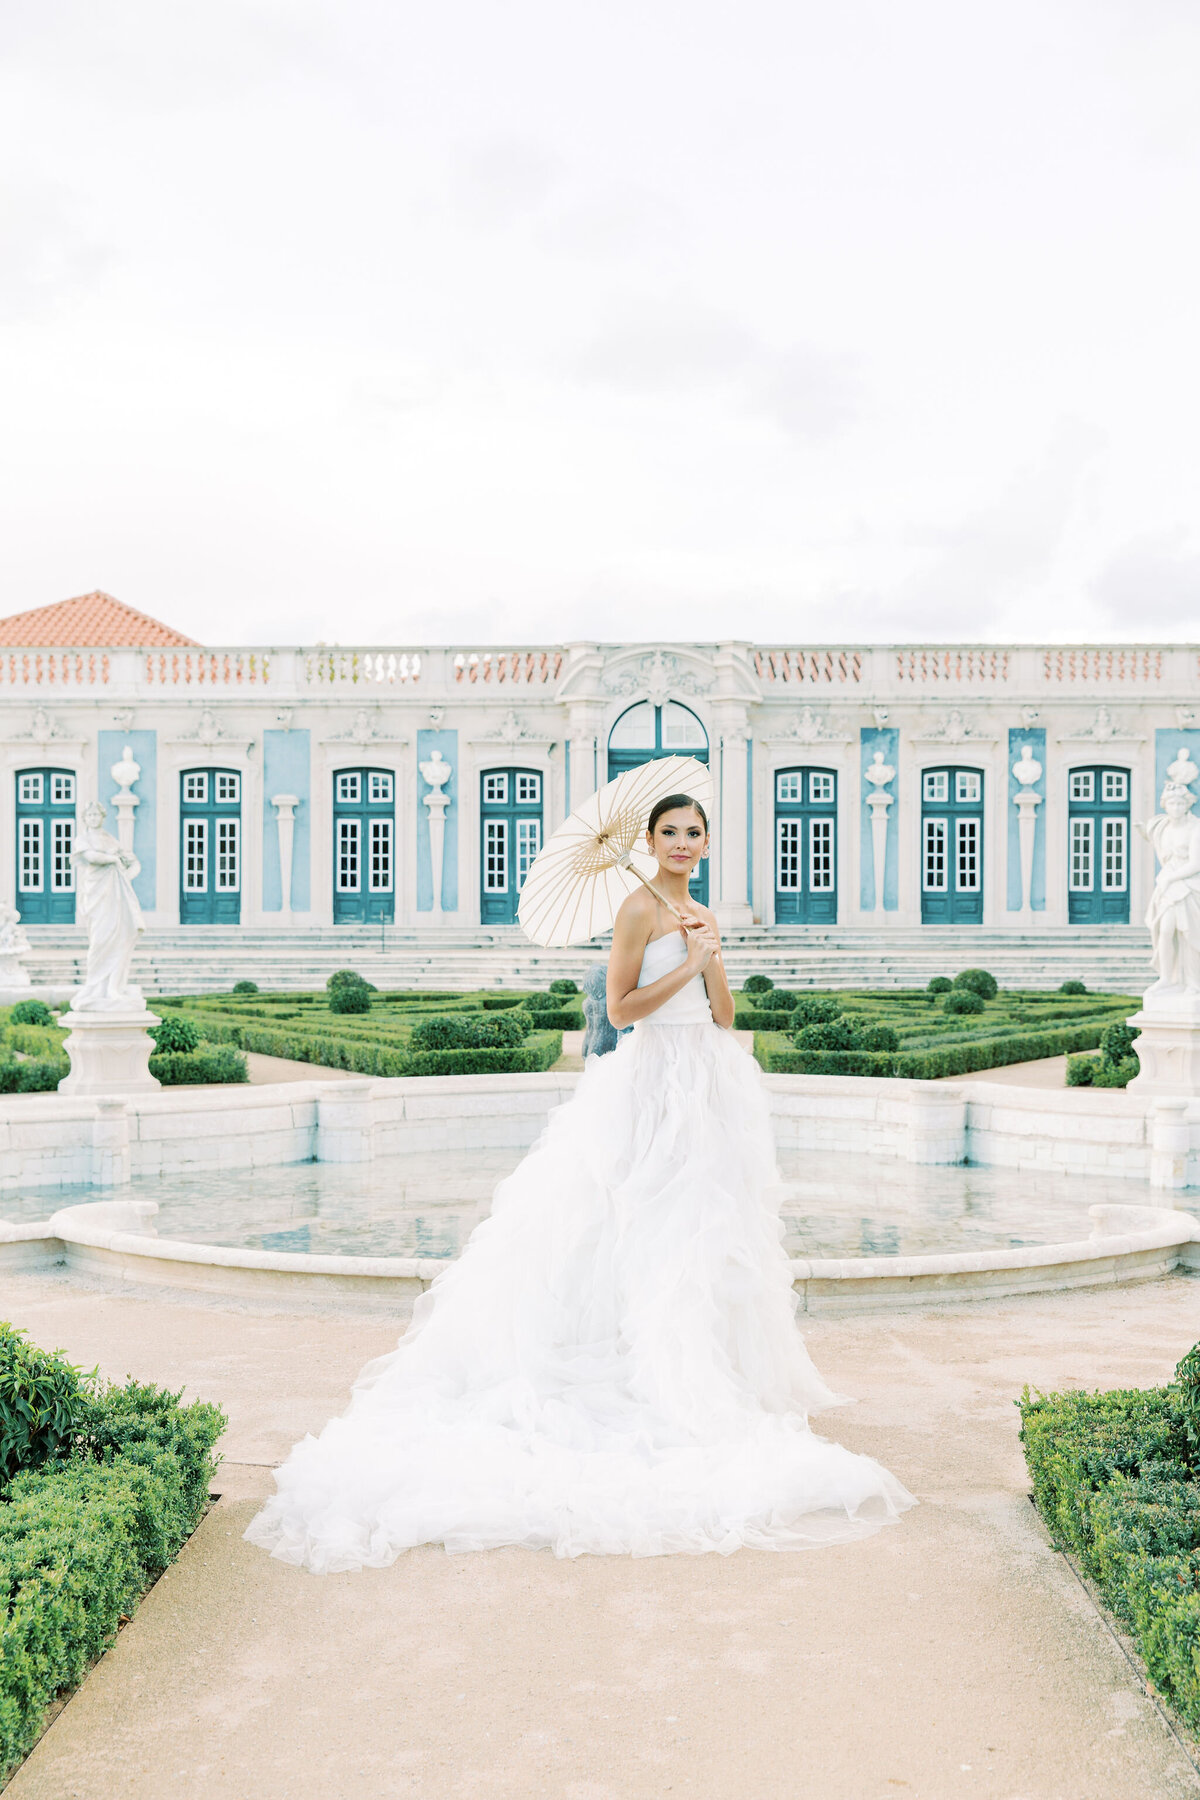 Beautiful Marchesa Bridal Gown for a Lisbon Destination Wedding in Palácio de Queluz